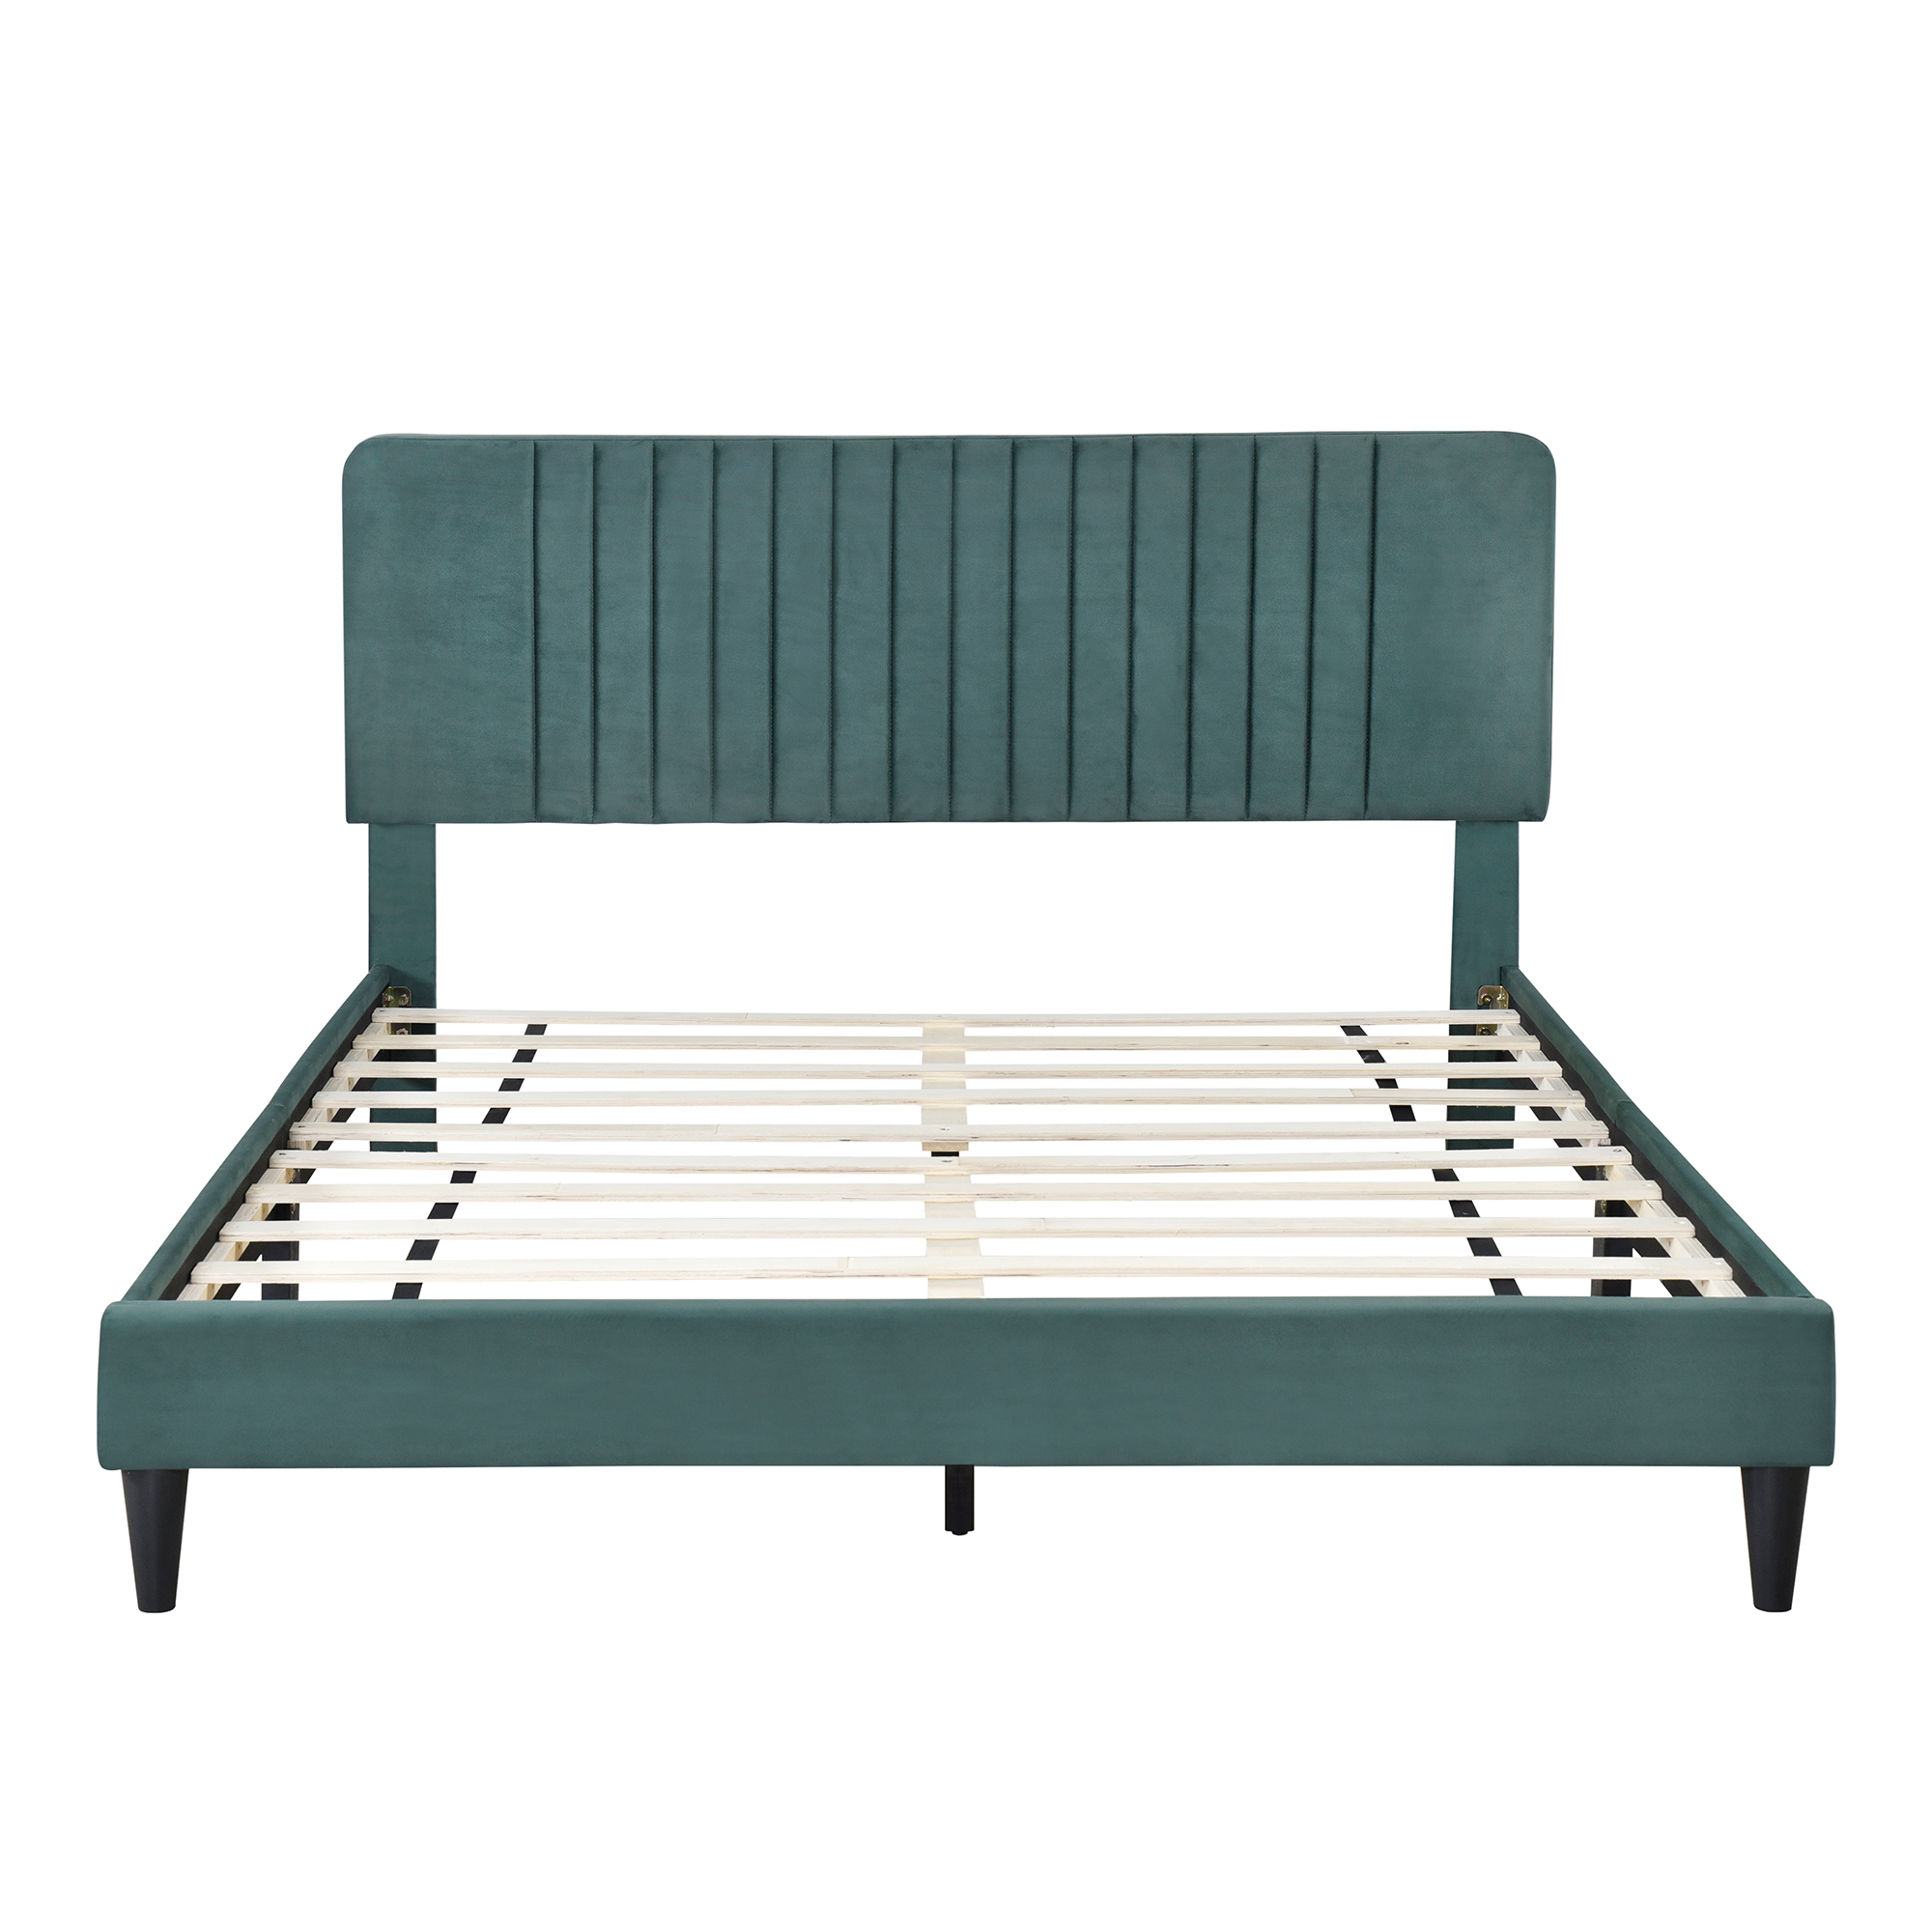 Queen Size Upholstered Platform Bed,No Box Spring Needed - WF294742AAF